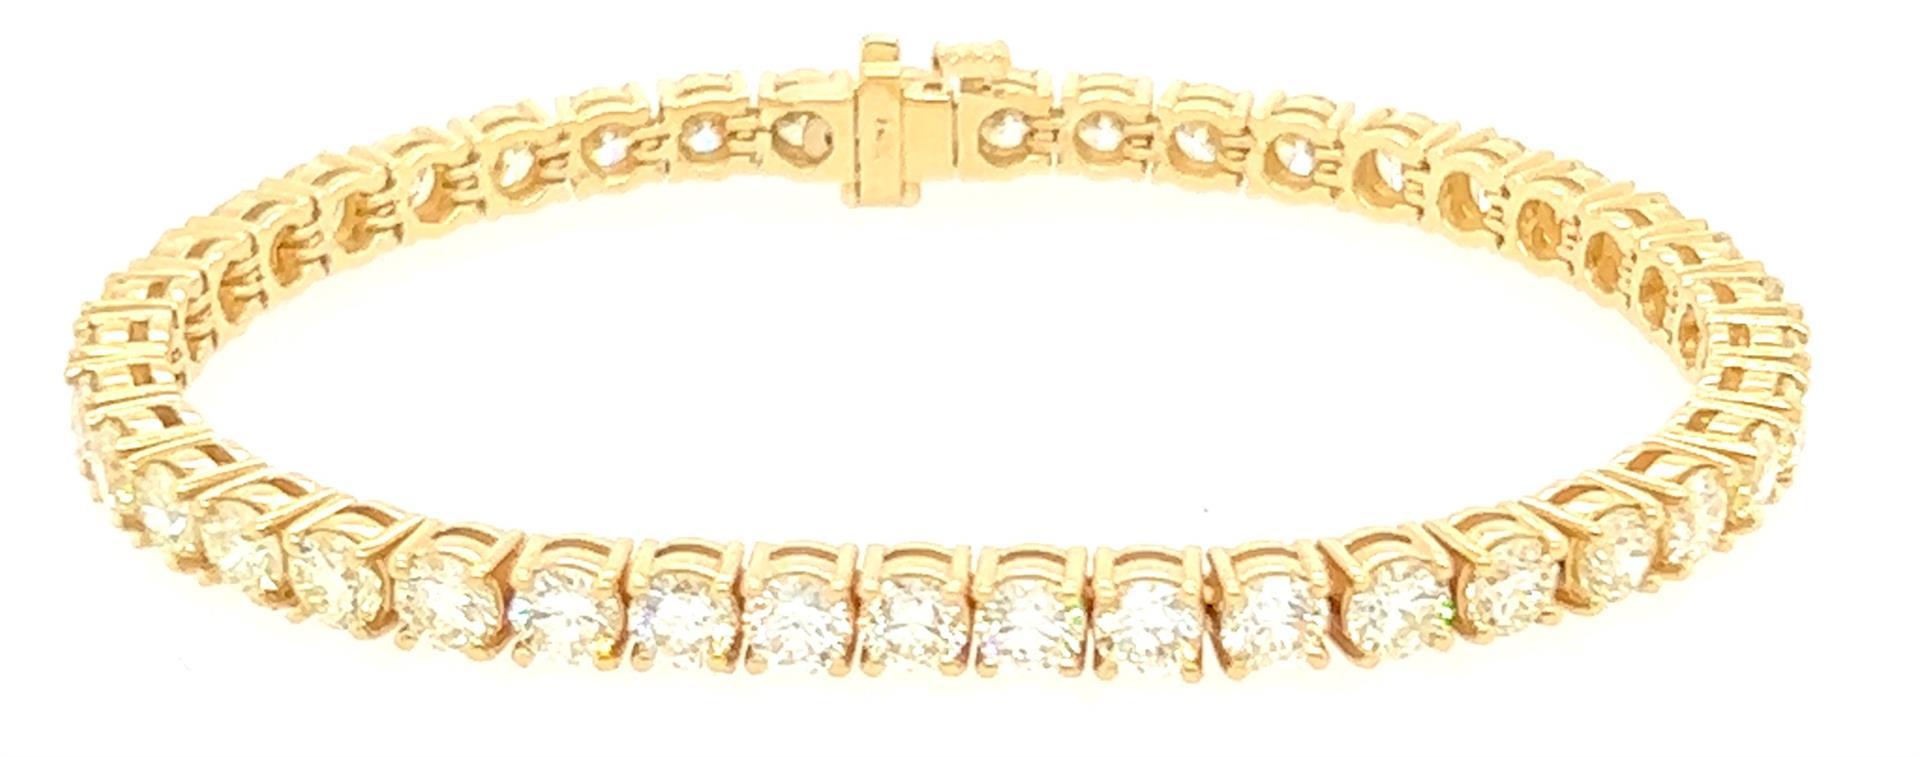 11.53 ctw Diamond Tennis Bracelet - 14KT Yellow Gold